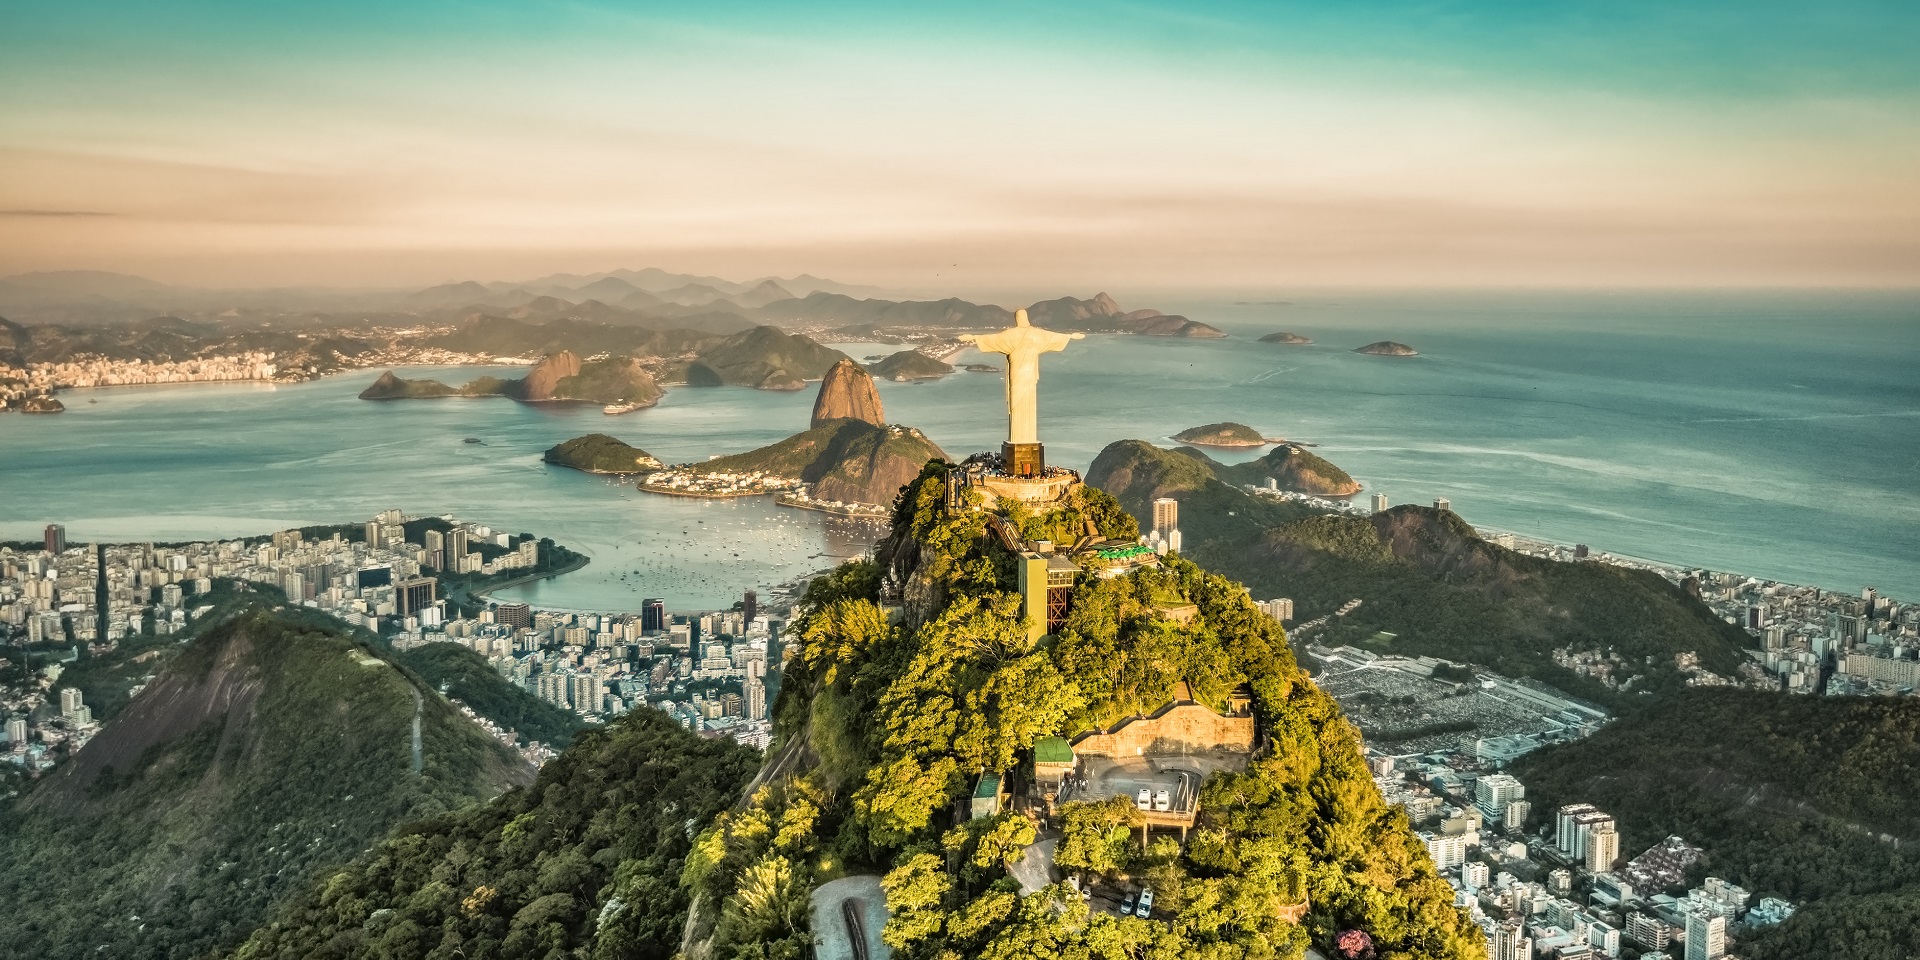 Rio de Janeiro. Iconic tourist spots.